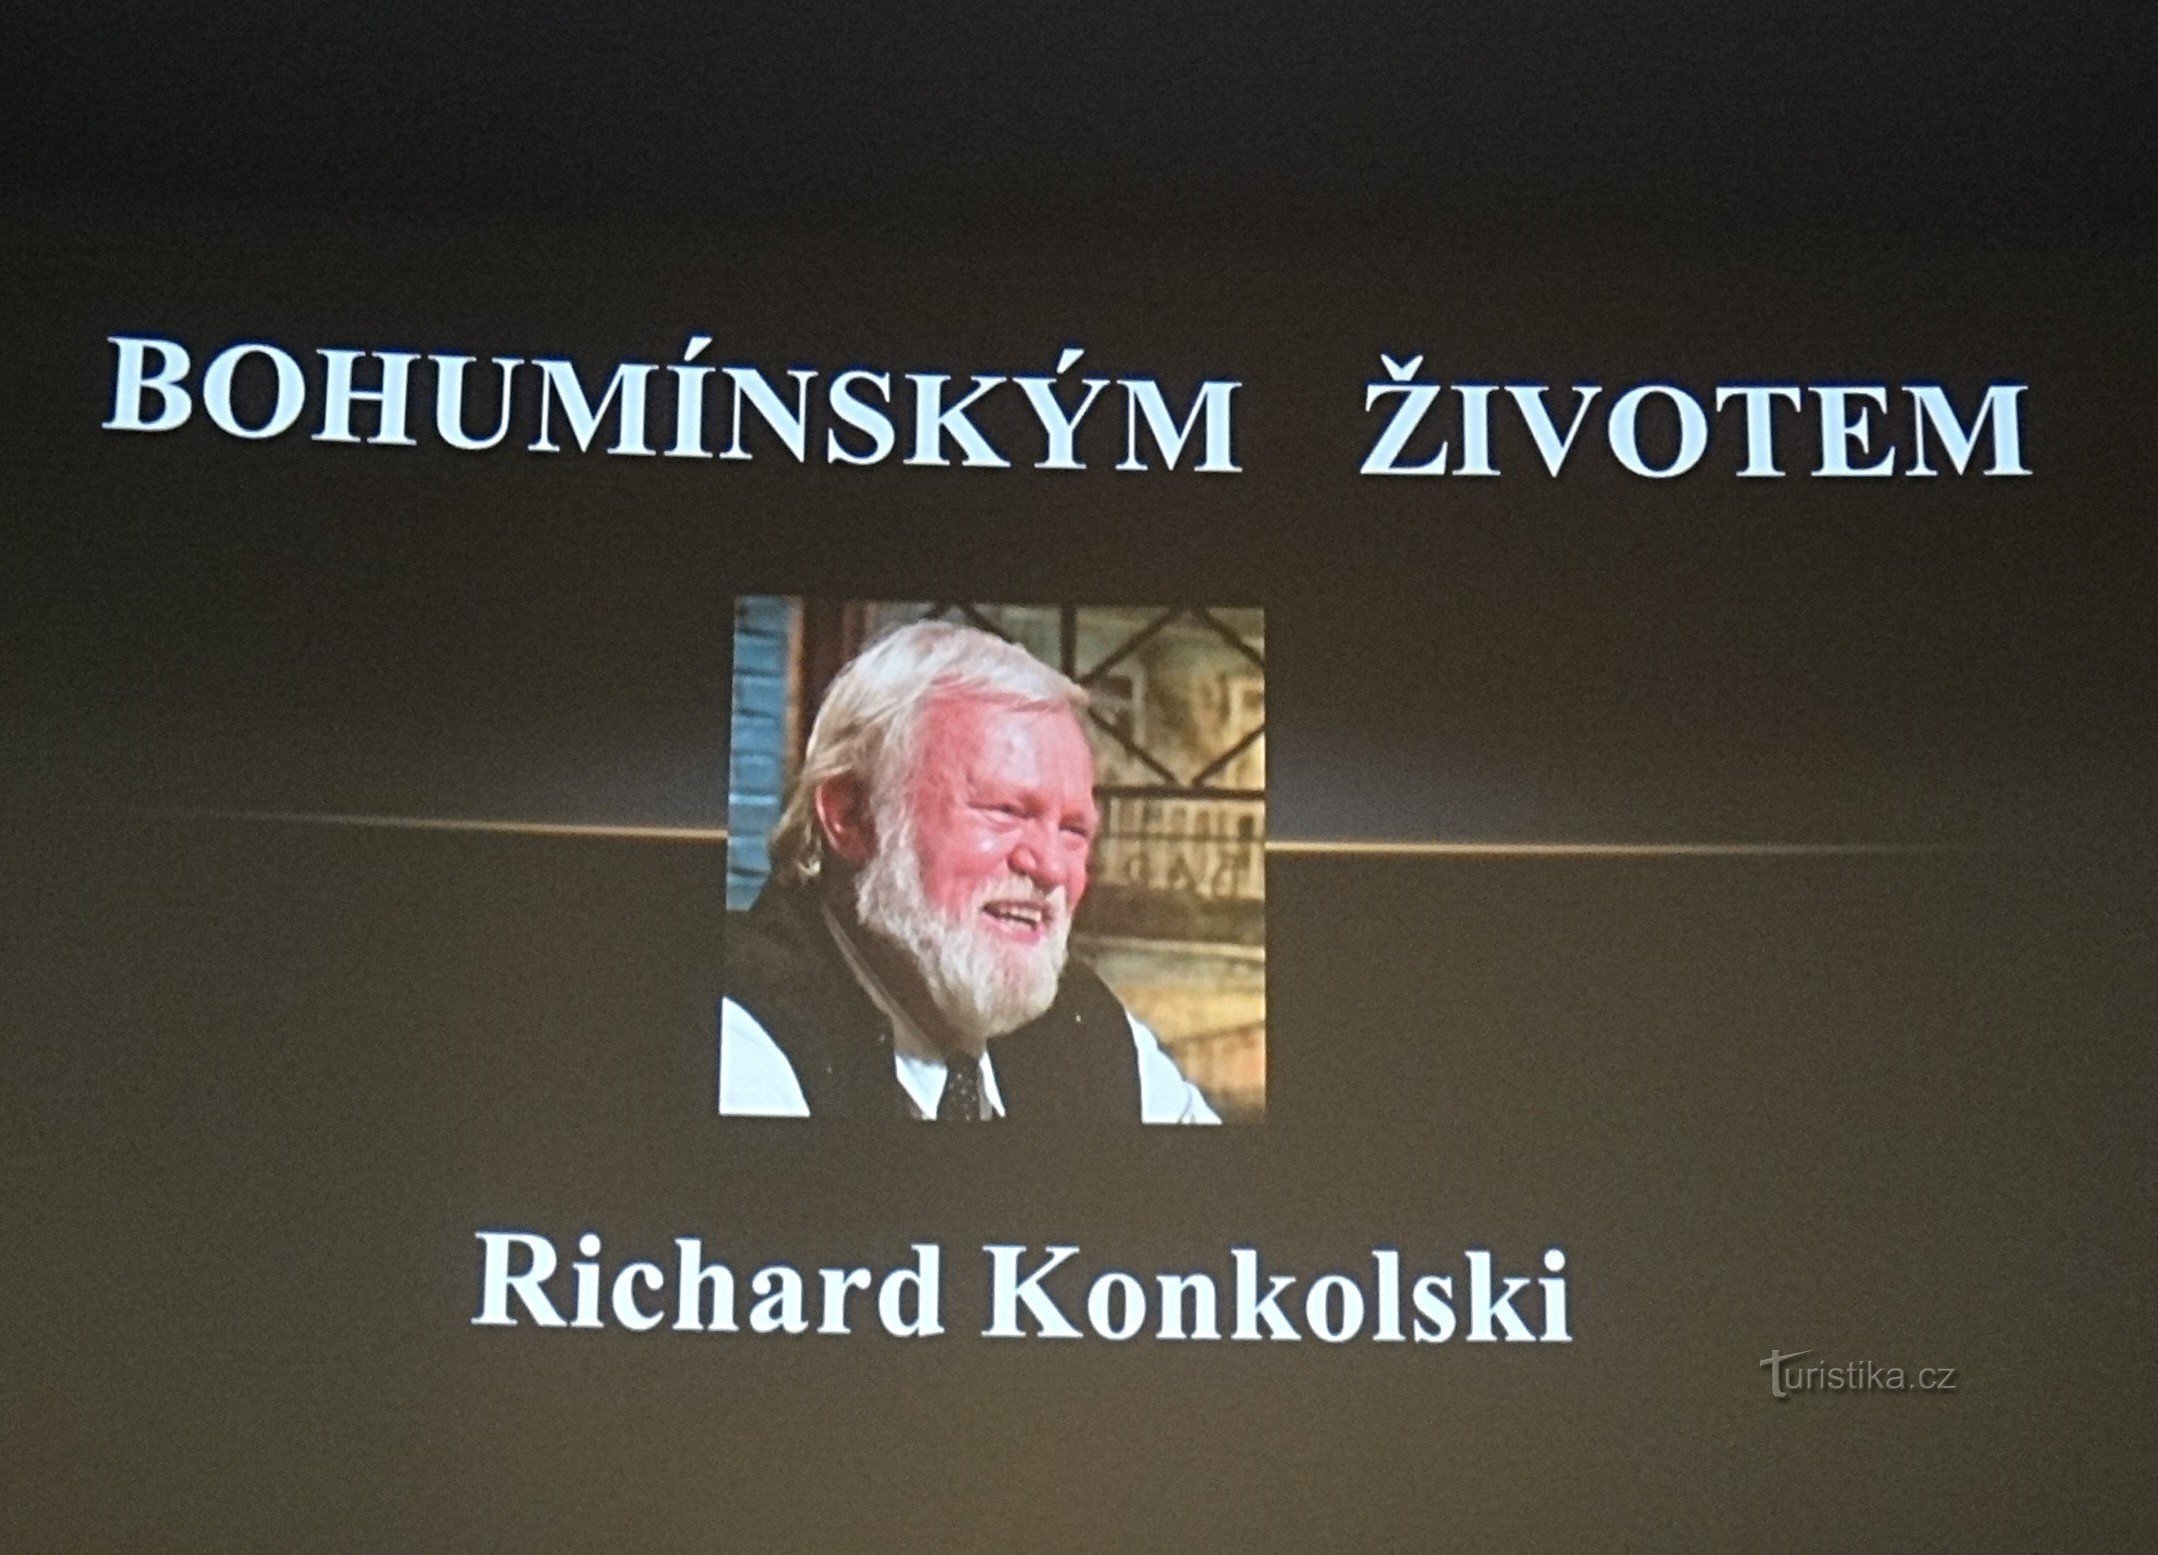 Richard Konkolski talks in the cinema